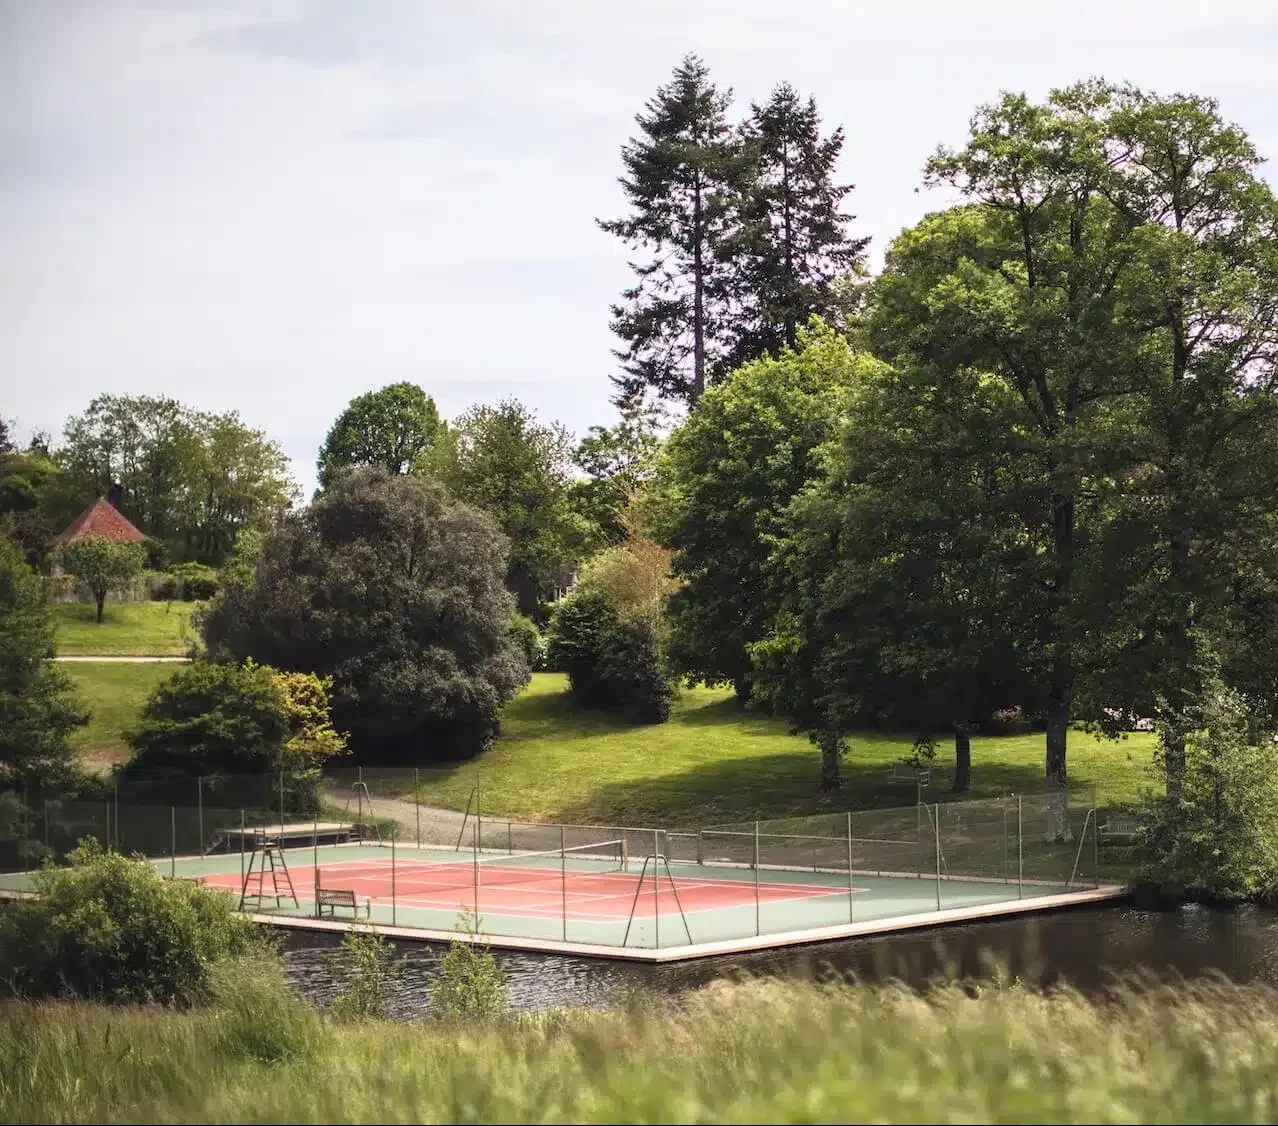 Domaine des etangs massignac France tennis